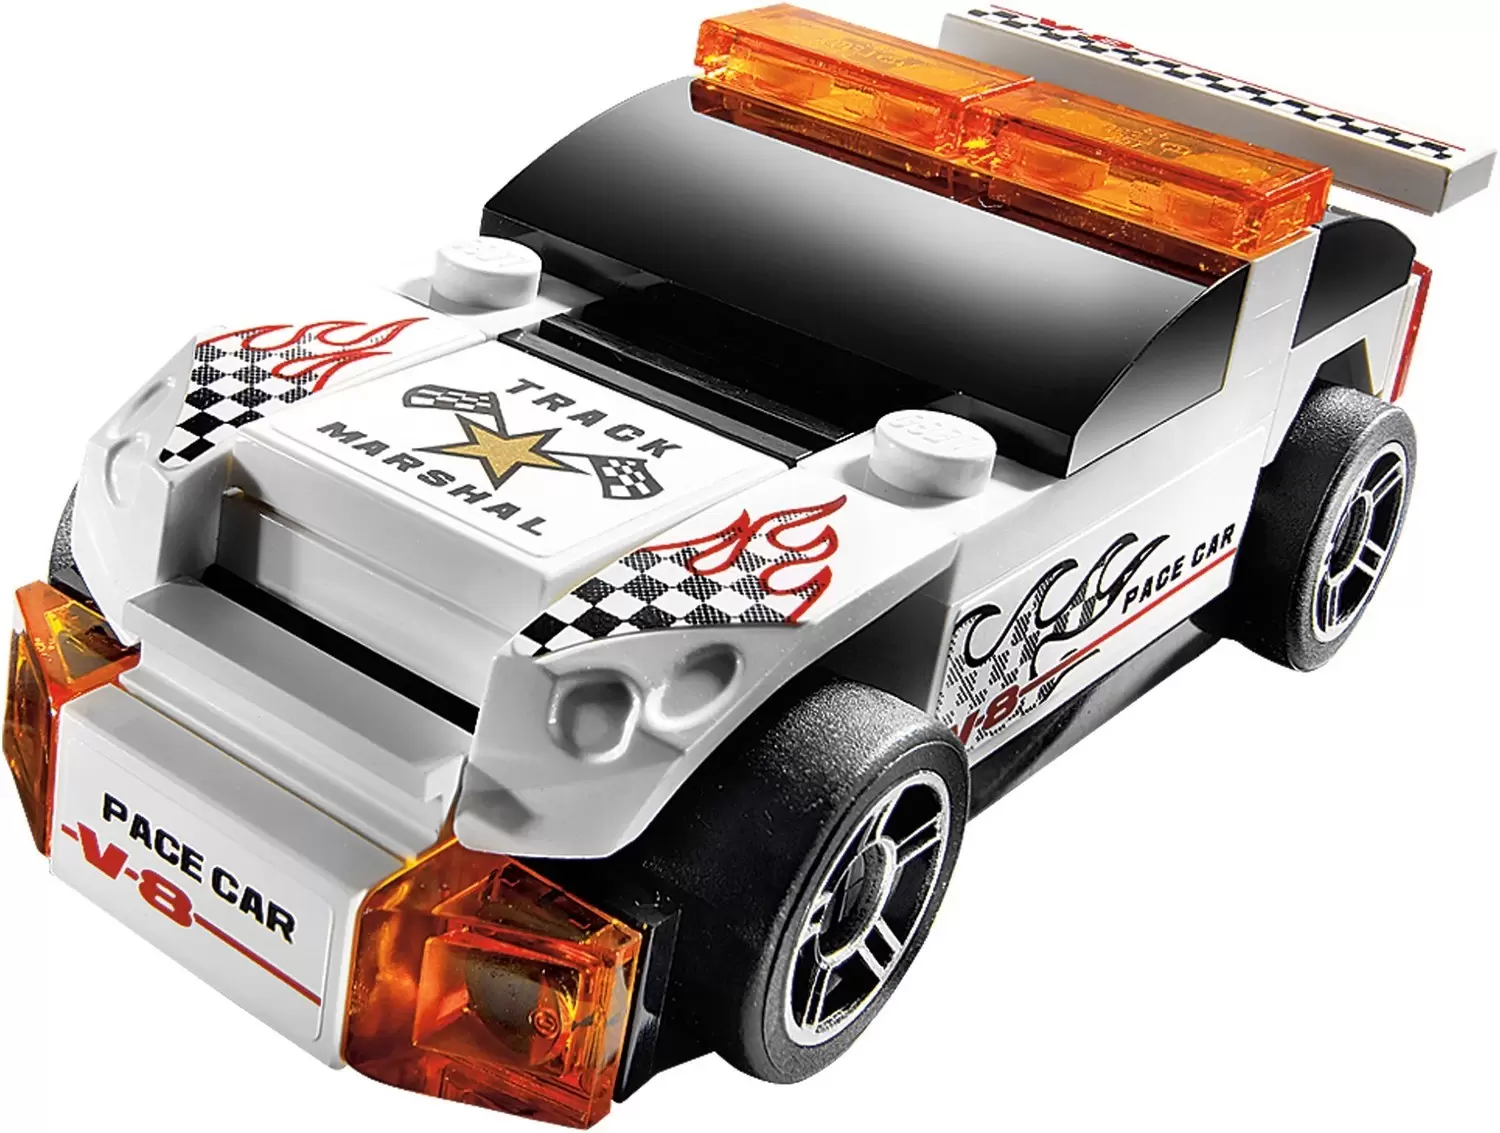 LEGO Racers - Track Marshall